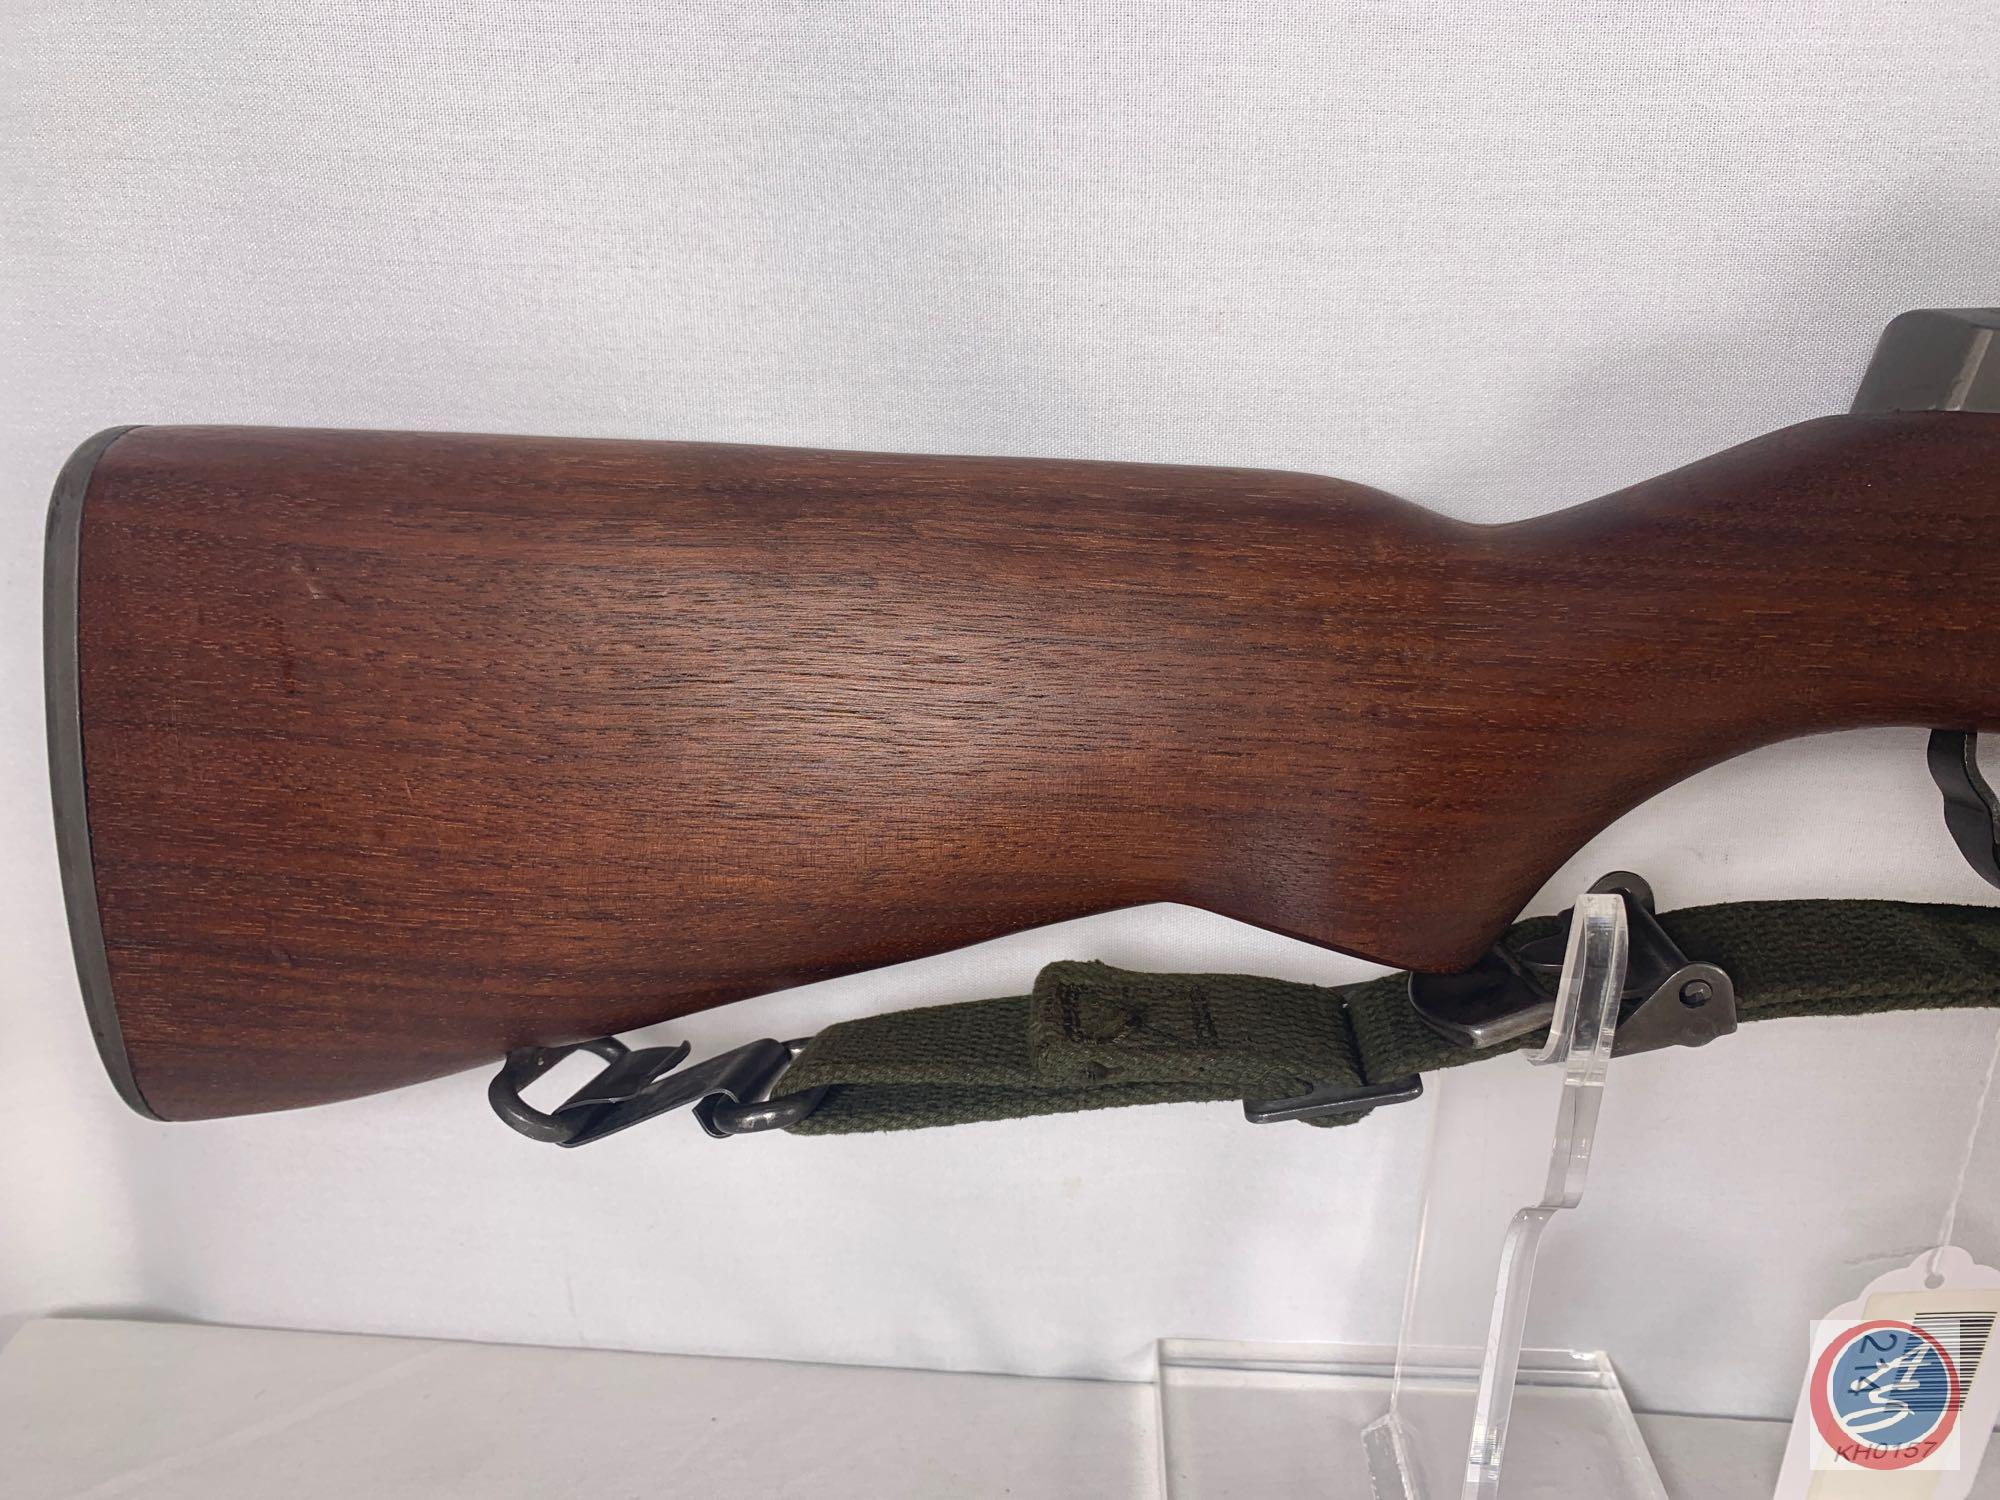 U. S. Springfield Model M-1 Garand 30 06 Rifle Semi-Auto US Military Issue Rifle with Sling Ser #